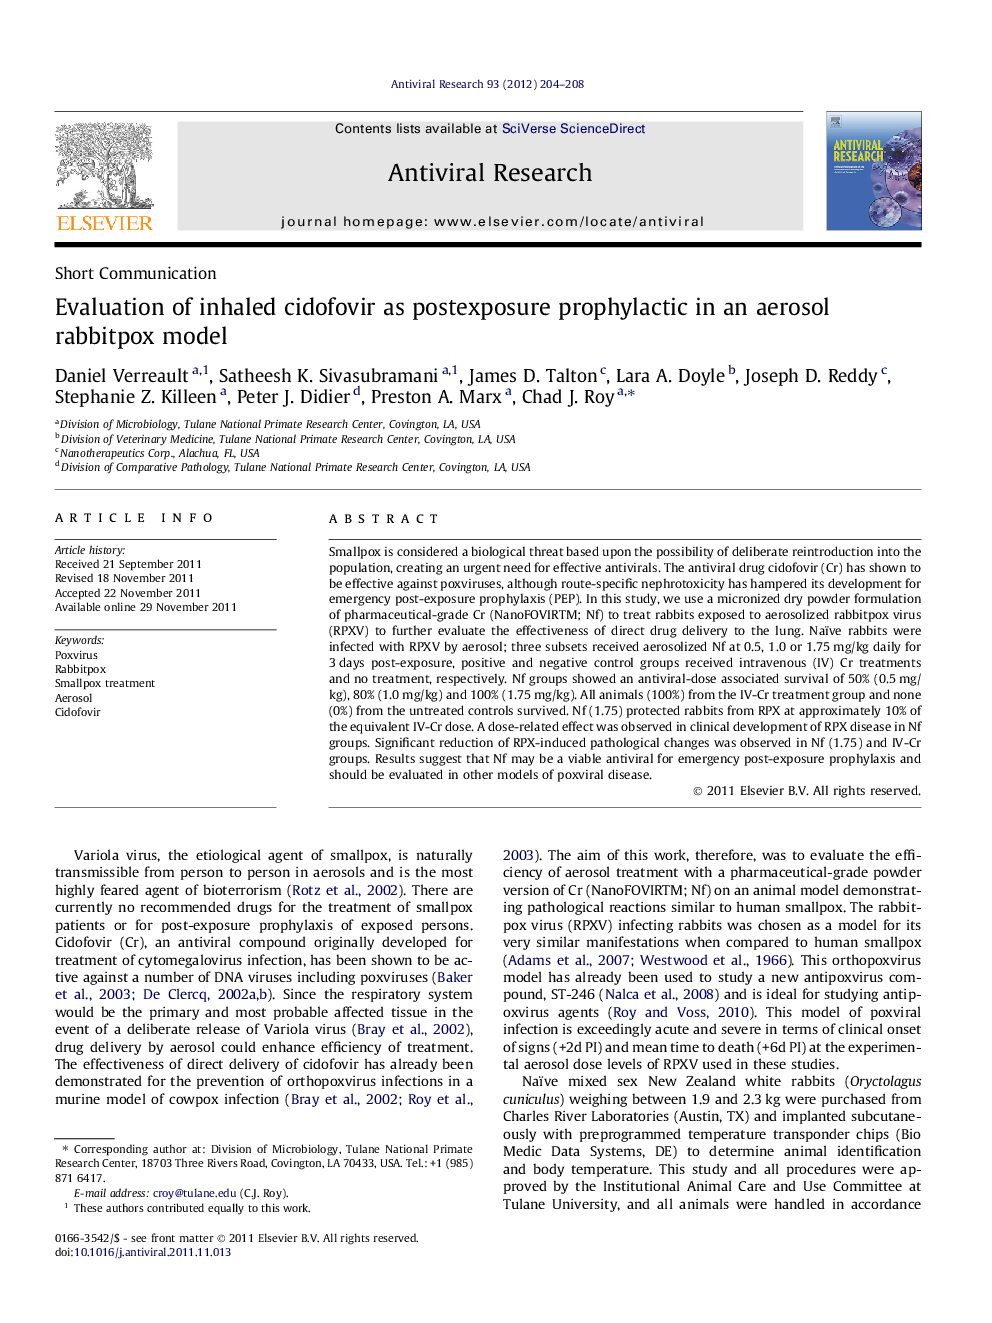 Short CommunicationEvaluation of inhaled cidofovir as postexposure prophylactic in an aerosol rabbitpox model